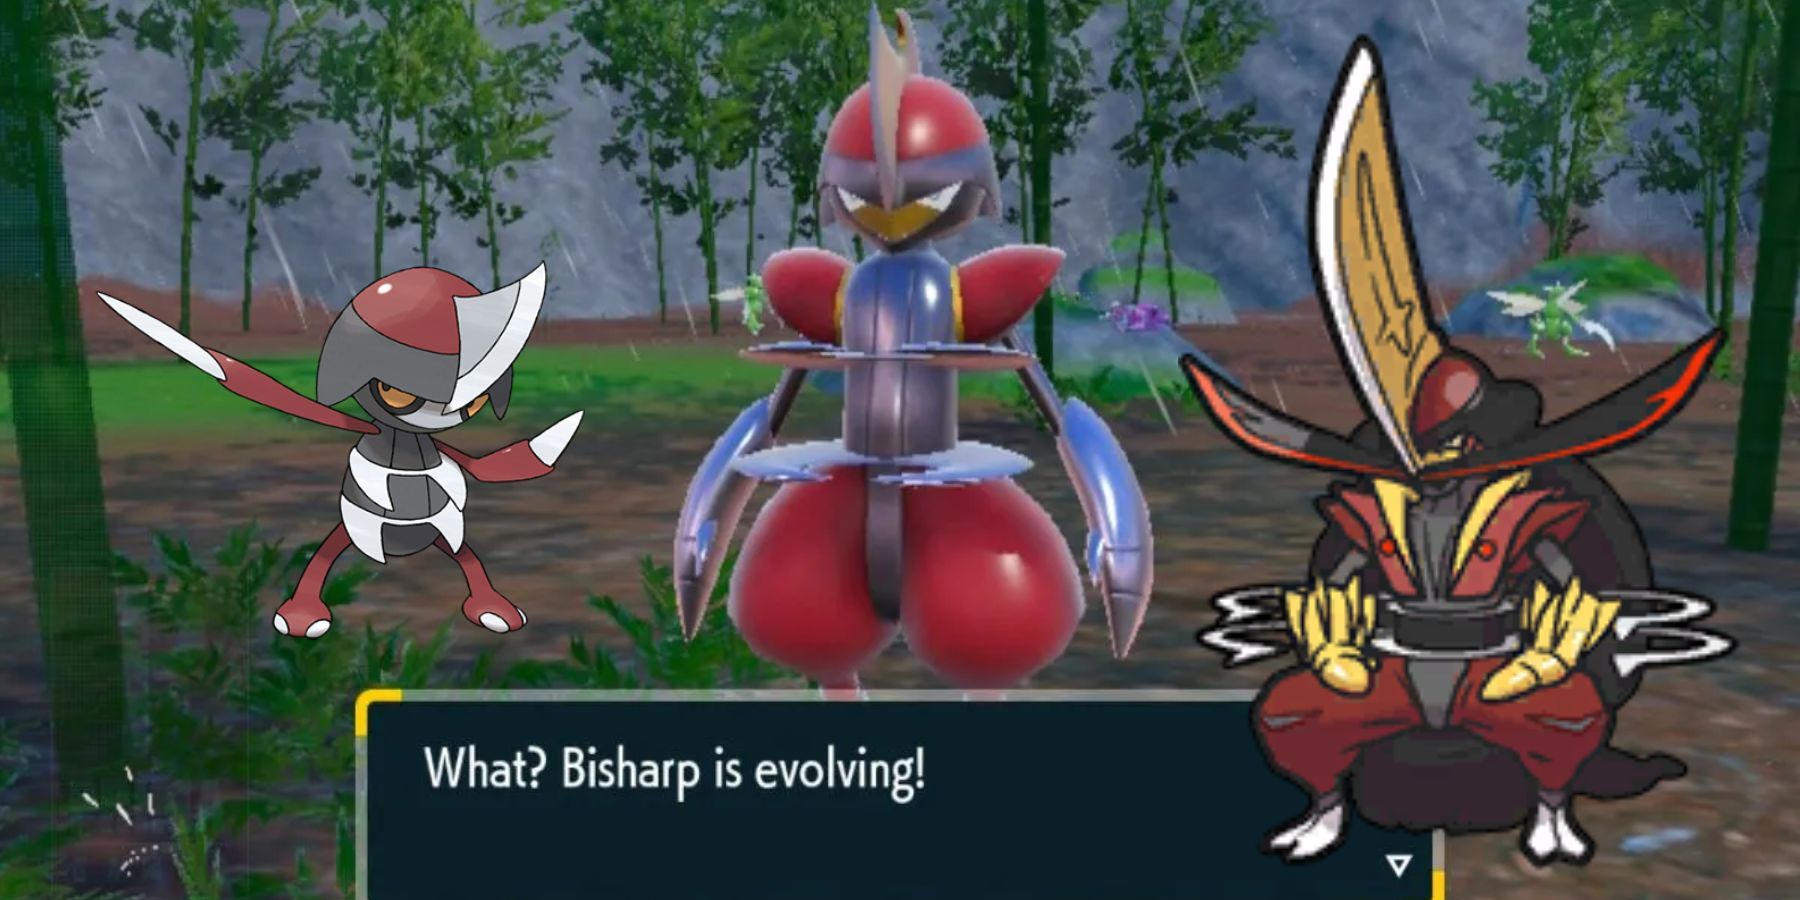 Pokémon Scarlet & Violet: How to evolve Bisharp into Kingambit